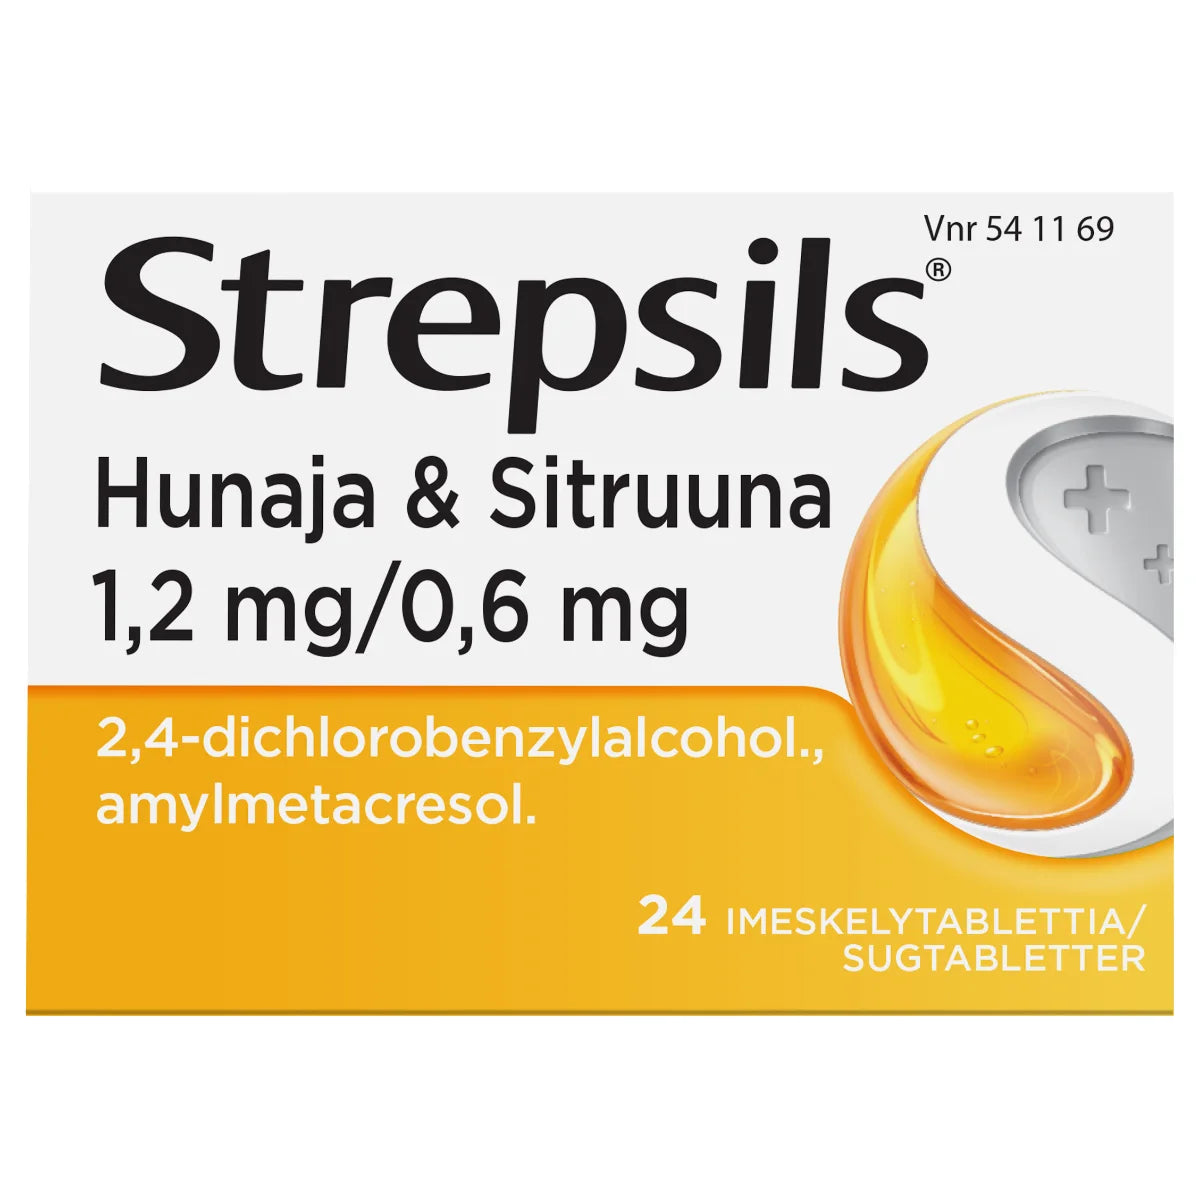 STREPSILS Hunaja & Sitruuna 0,6 mg/1,2 mg imeskelytabletti 24 kpl